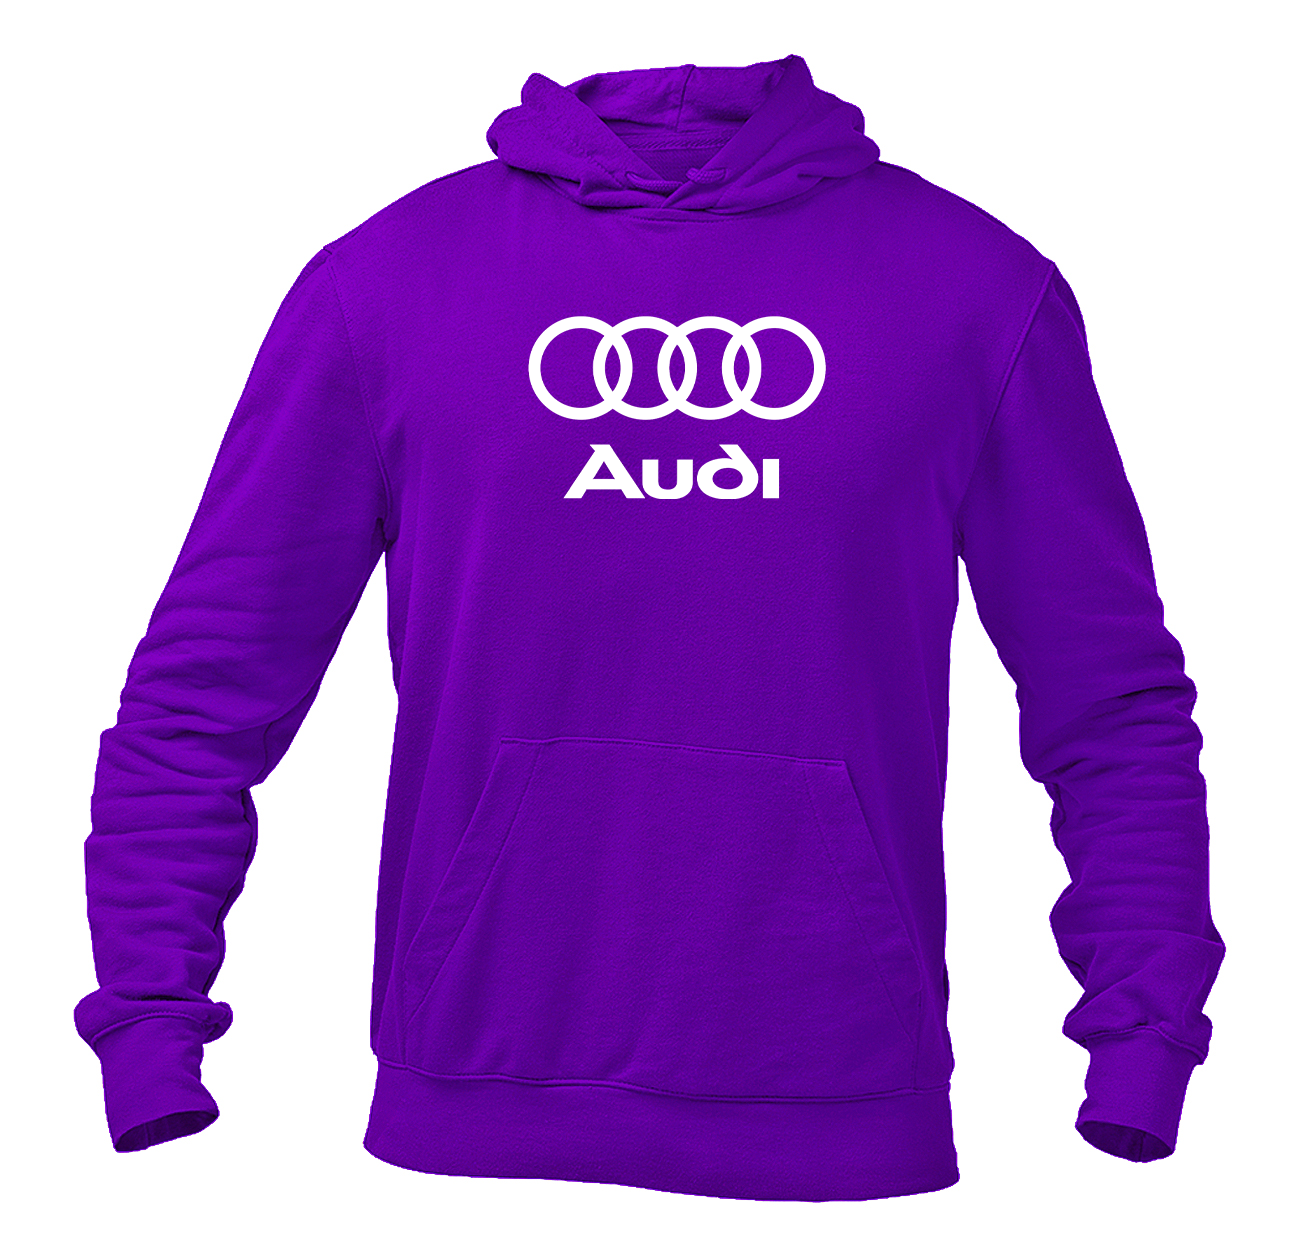 Men’s Audi Motorsports Car Pullover Hoodie